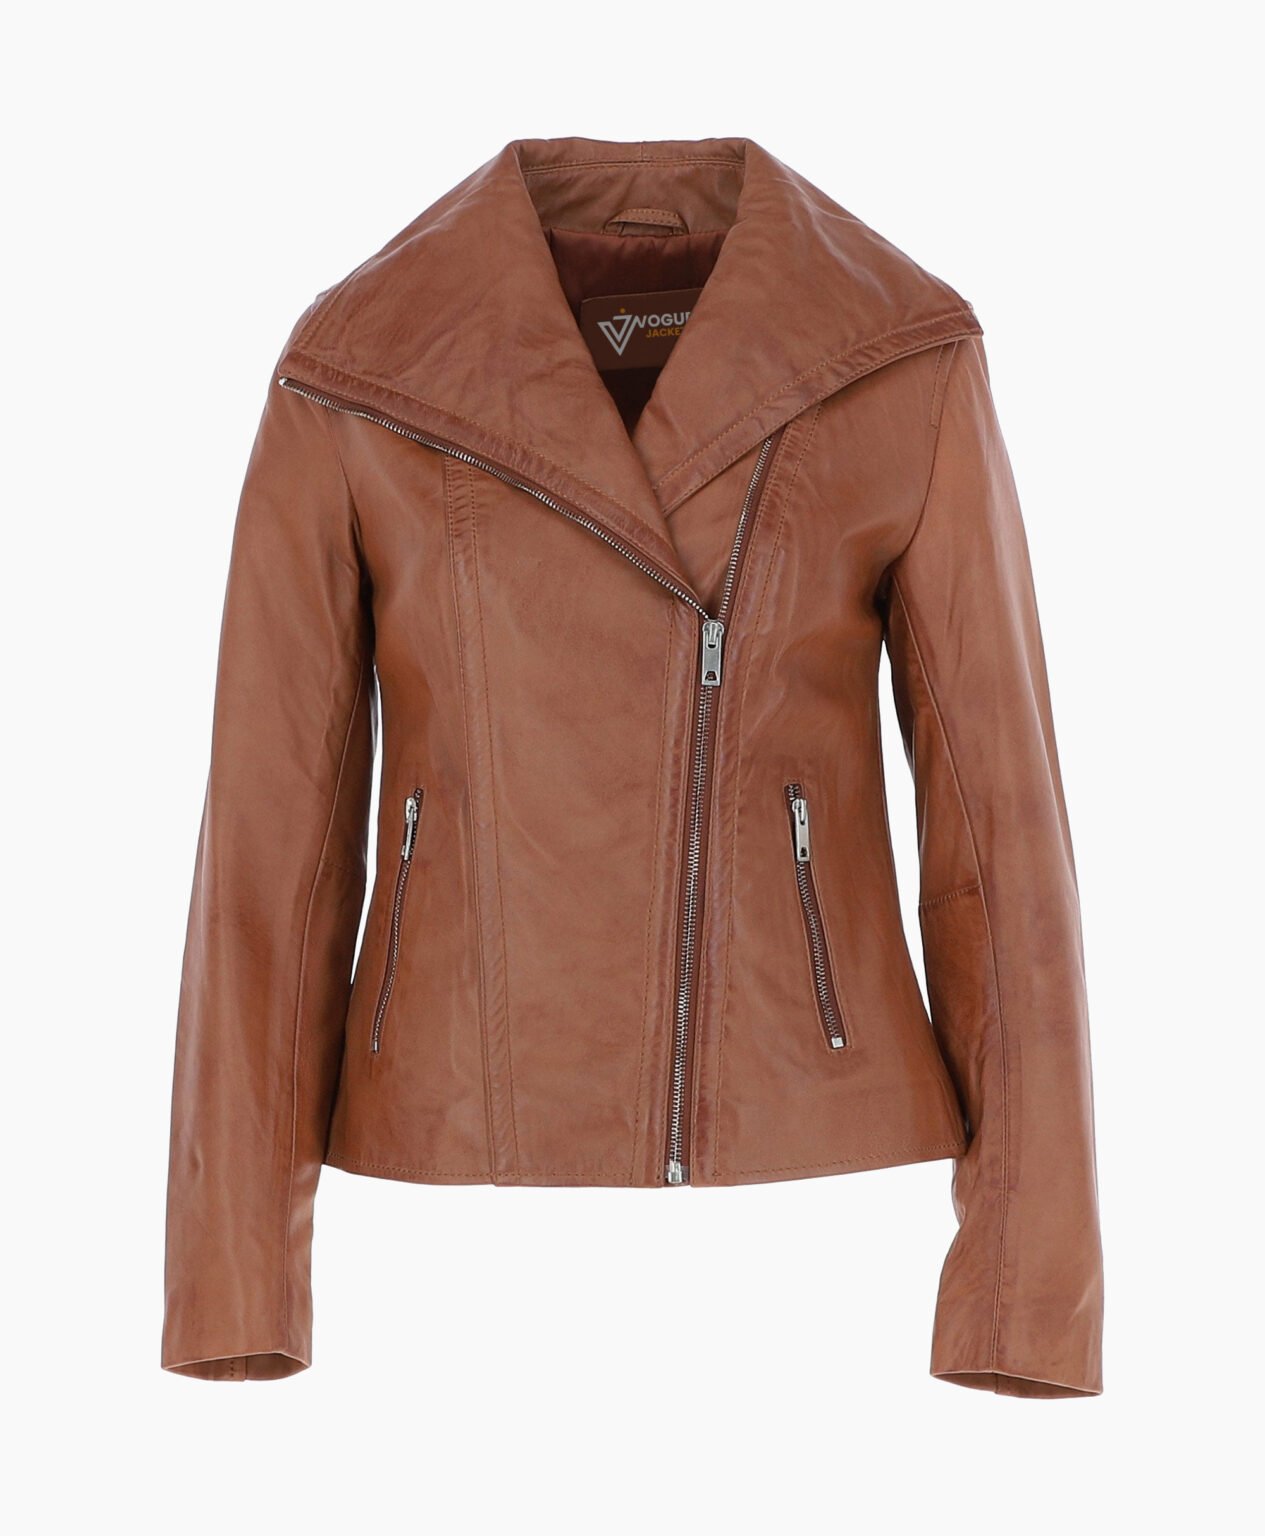 vogue-jacket-leather-jacket-fashion-collar-tan-shelby-image200